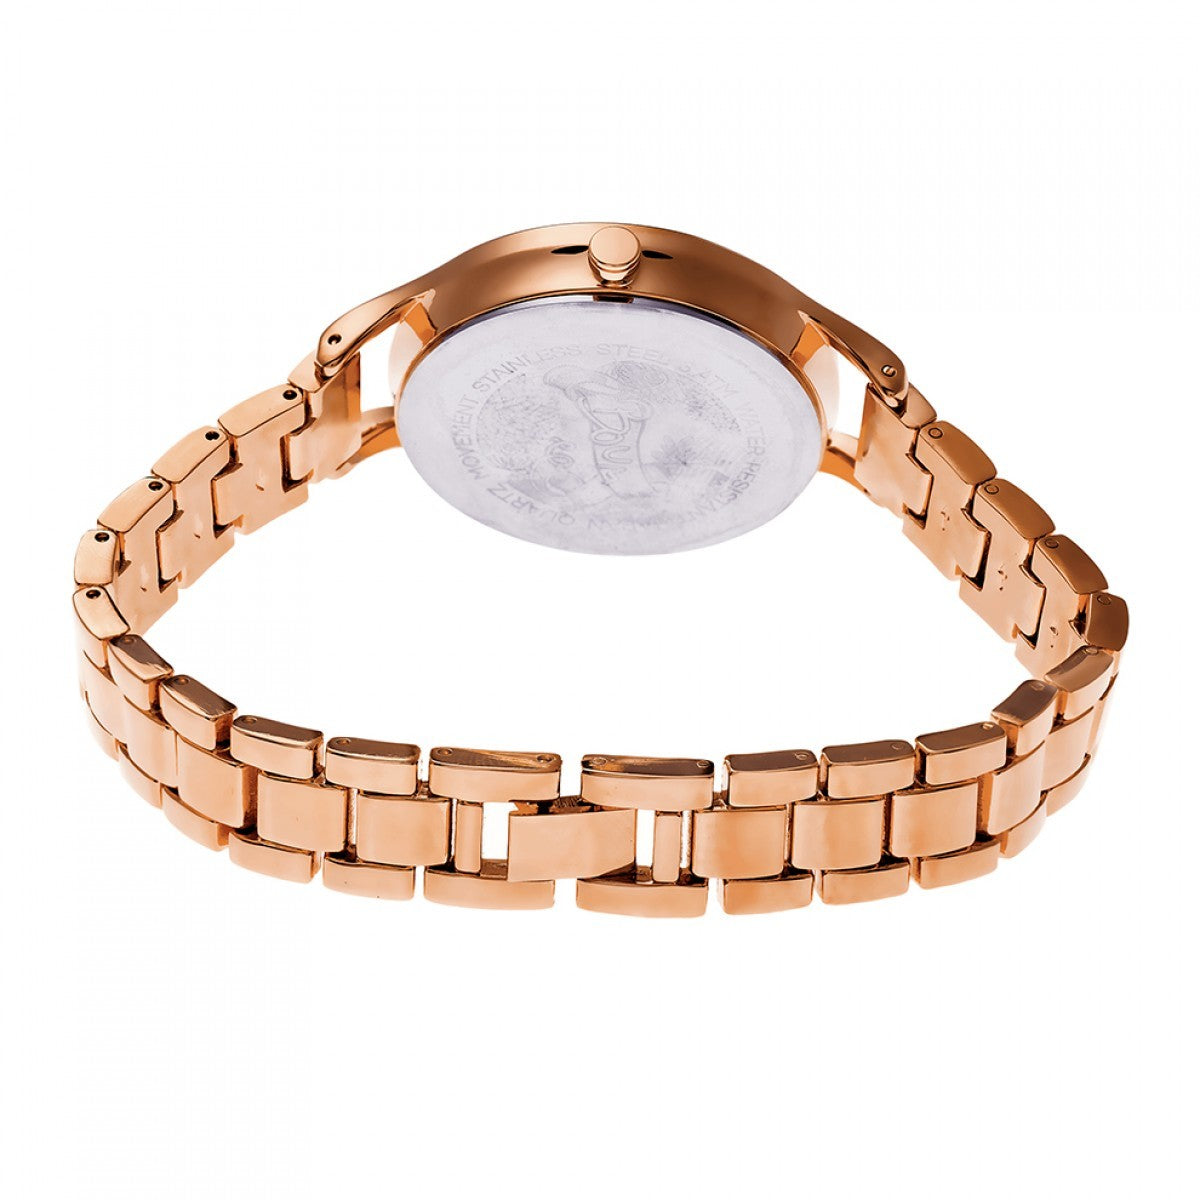 Boum Bulle Bracelet Watch - Rose Gold/Nude - BOUBM4705